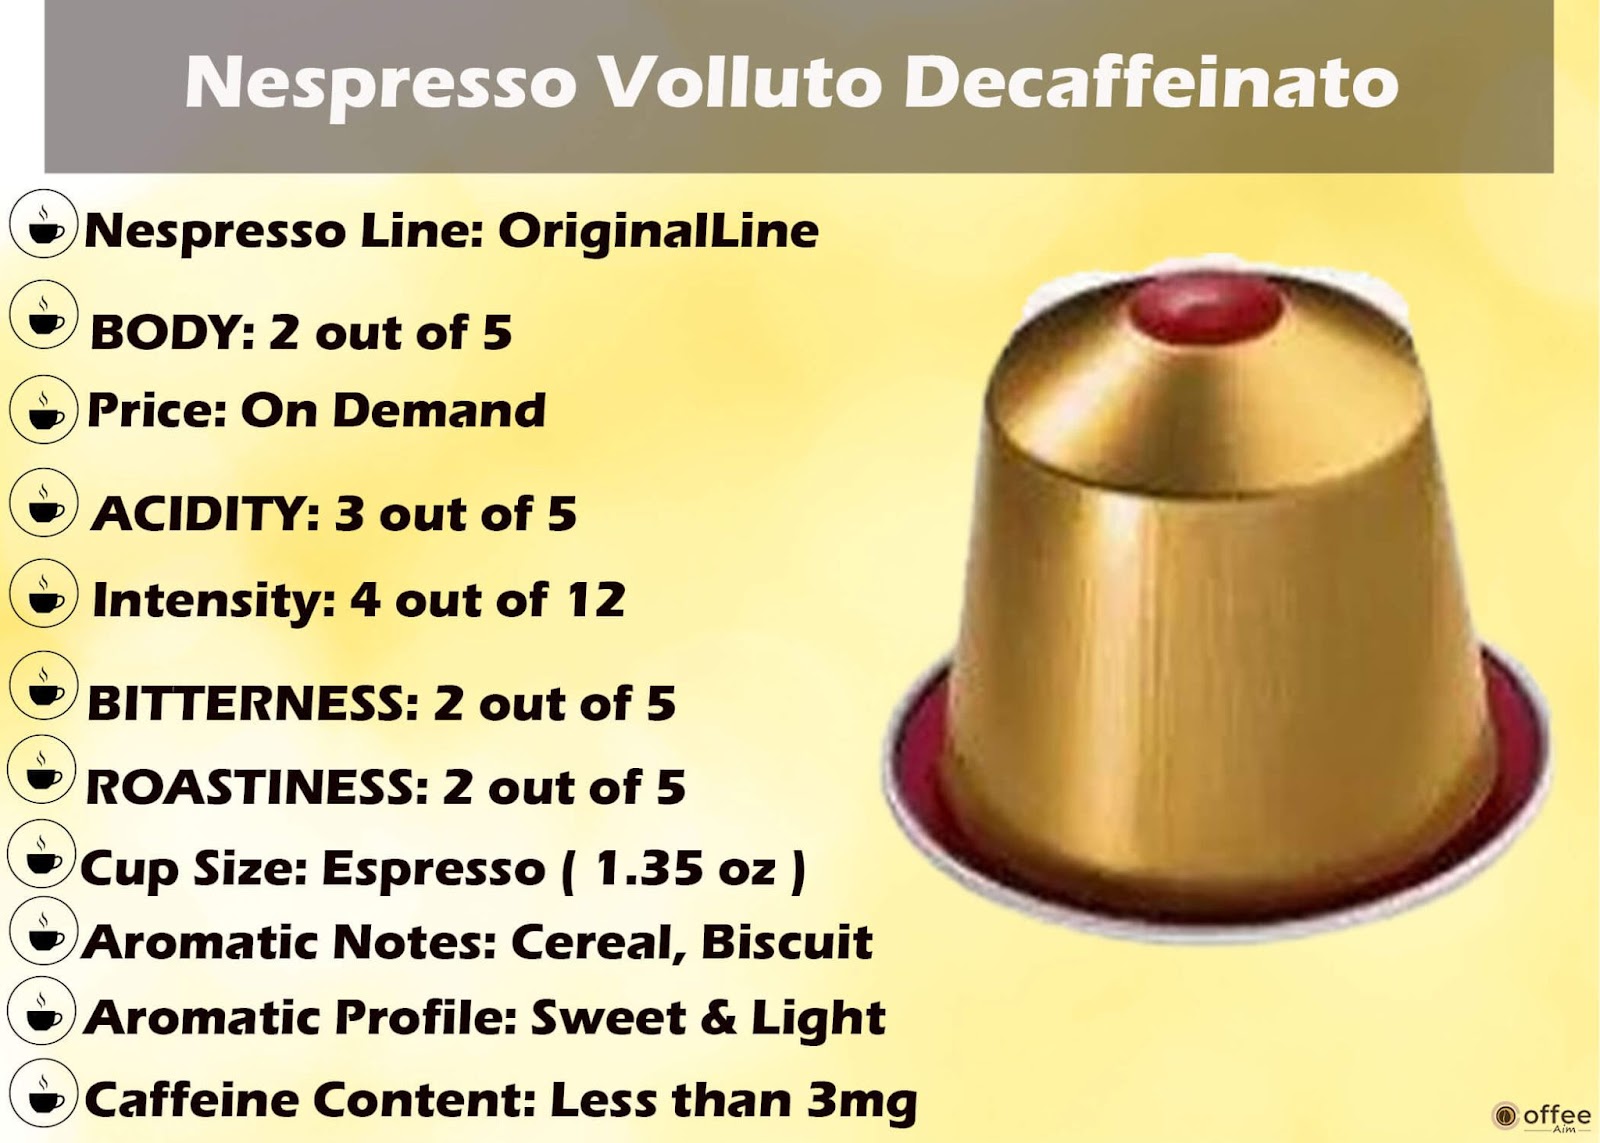 Features Chart of Nespresso Decaffeinato Volluto Original Line Capsule.